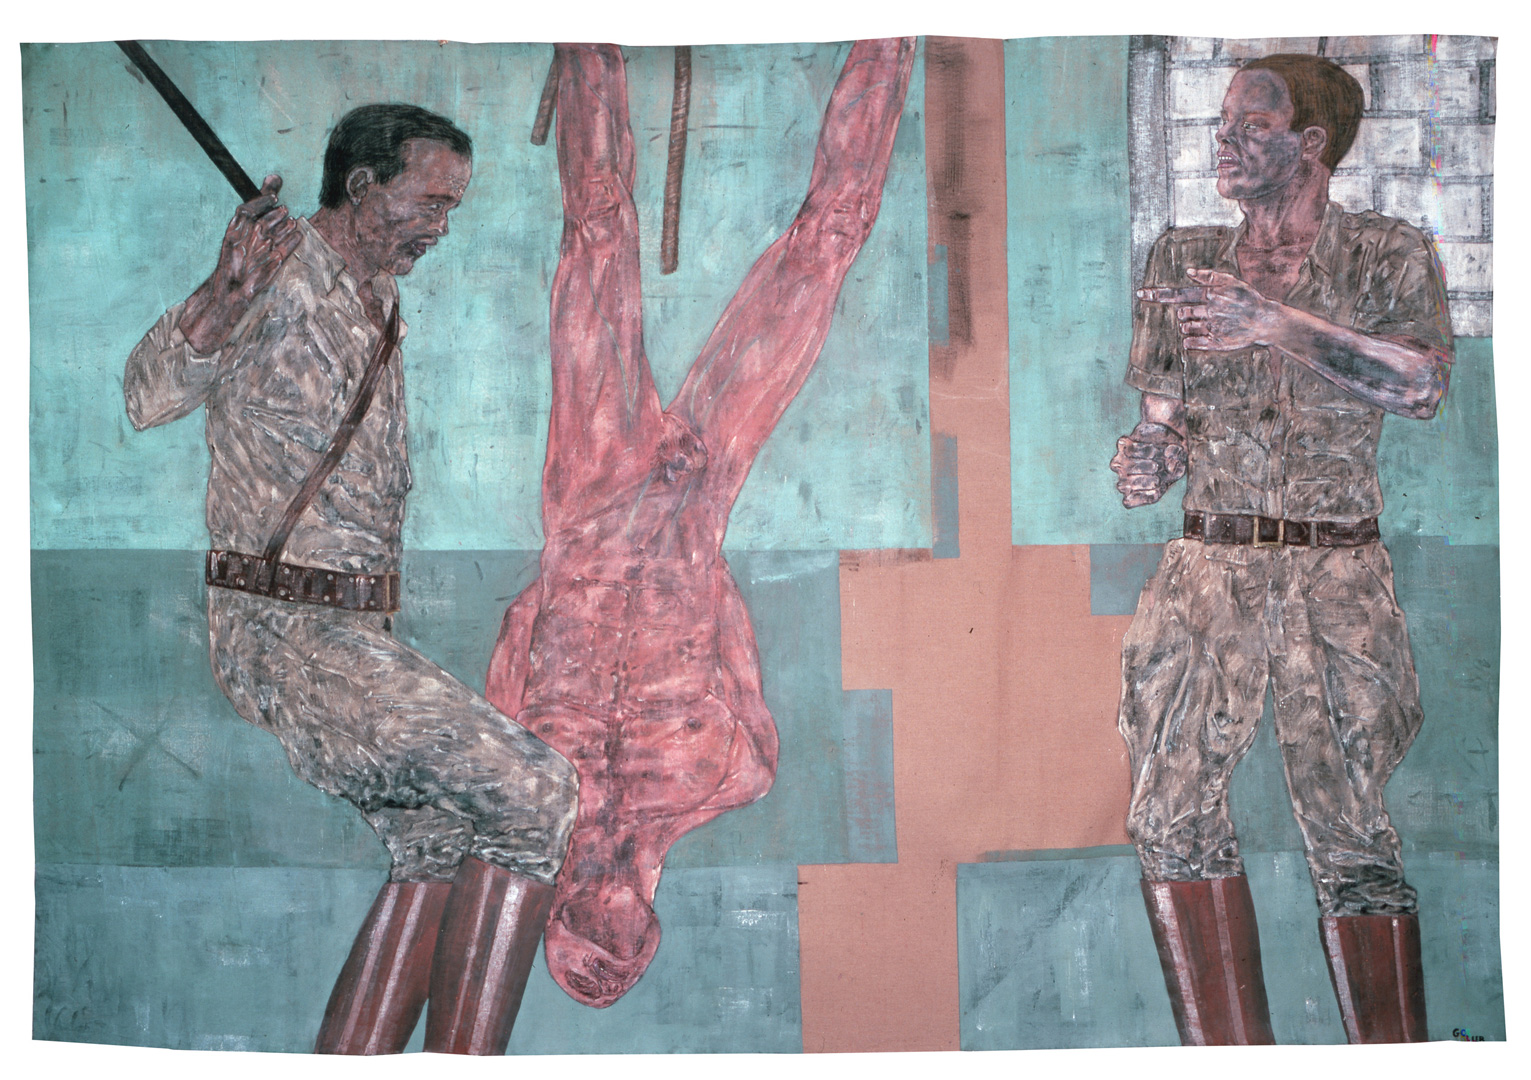 Leon Golub - Interrogation I, 1980-81, acrylic on linen